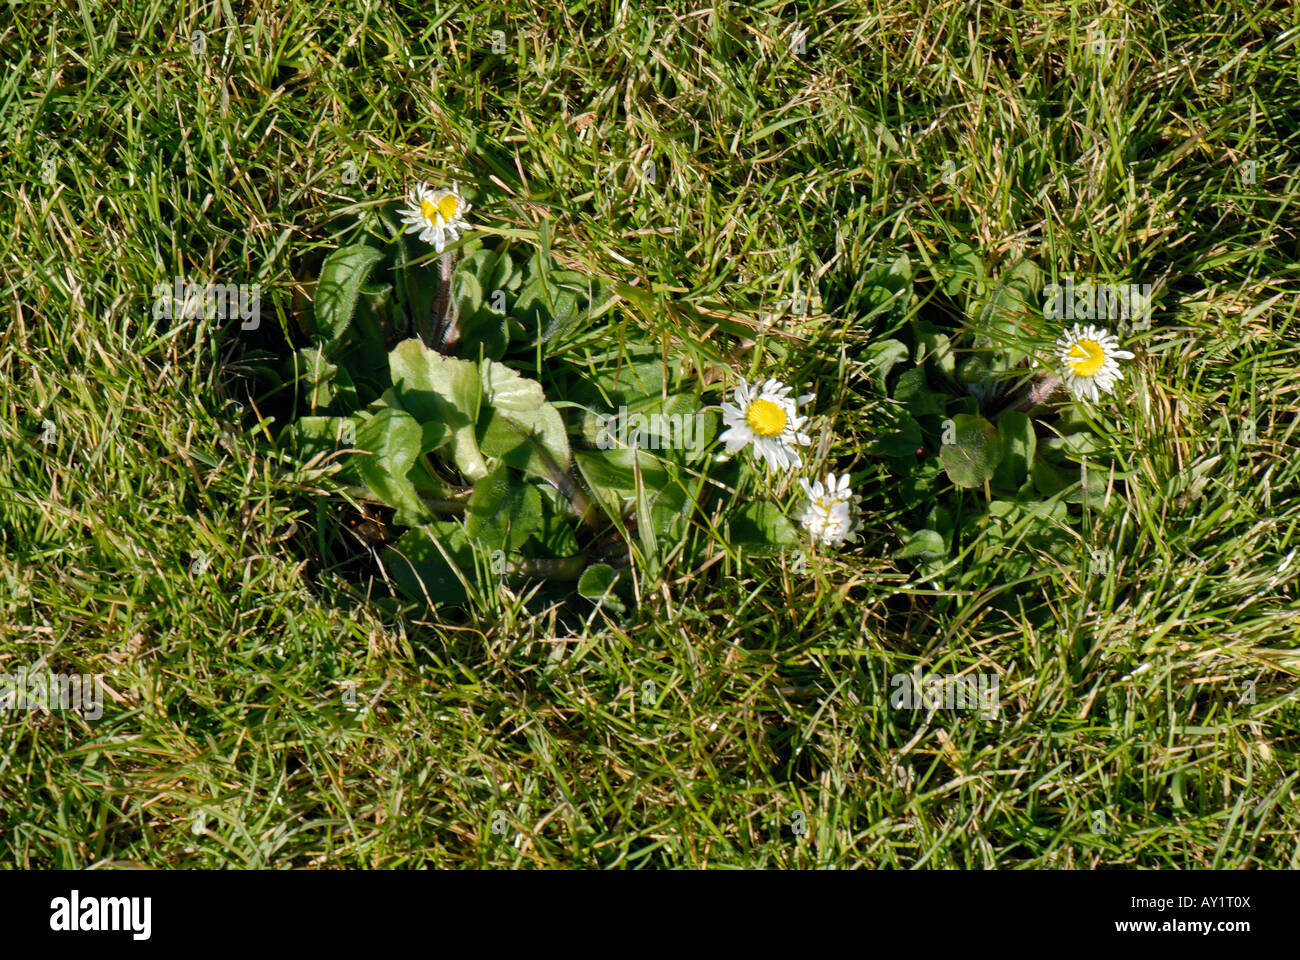 Flowering daisy Bellis perennis in a garden lawn Stock Photo